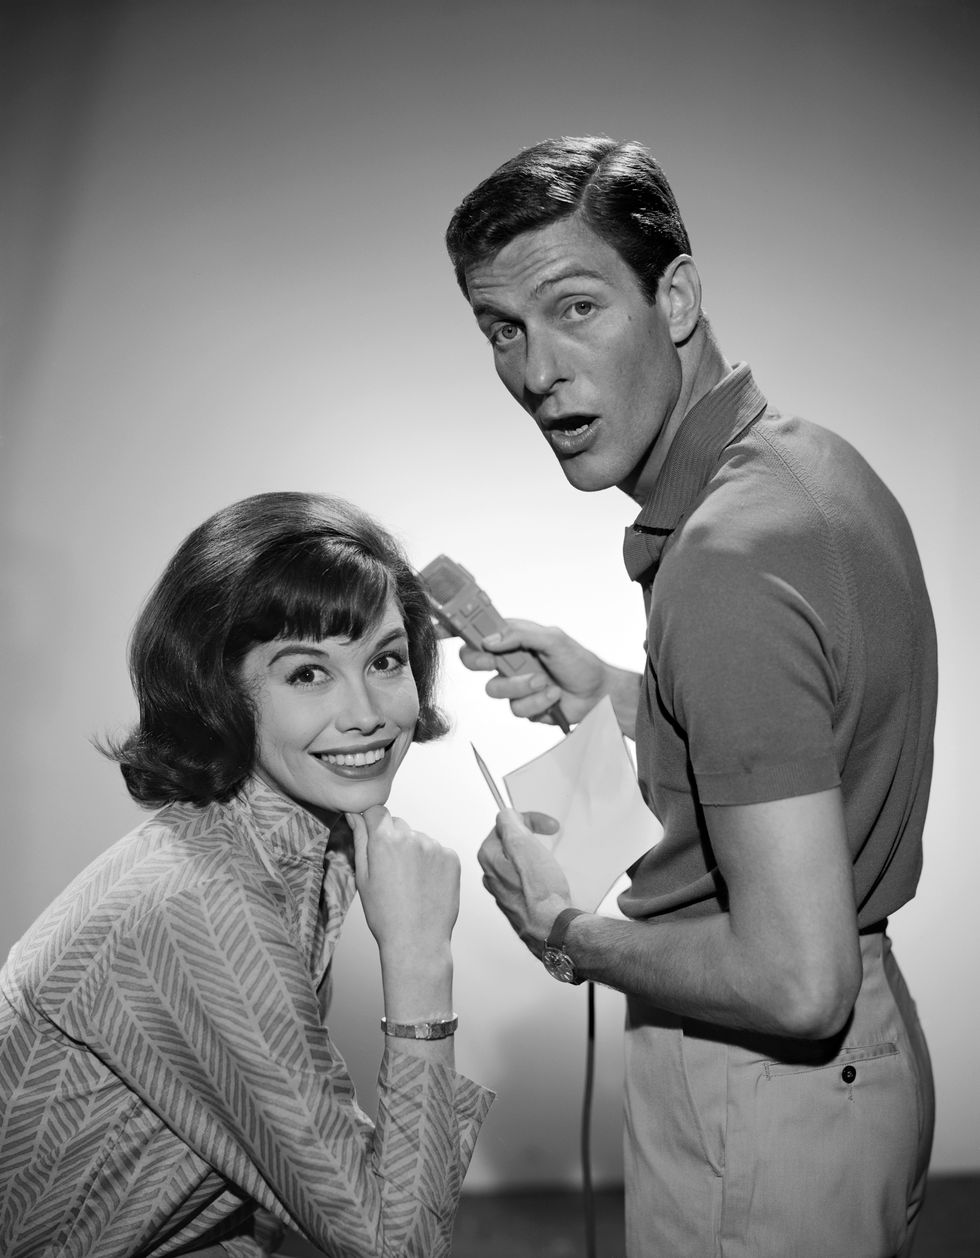 Mary Tyler Moore and Dick Van Dyke